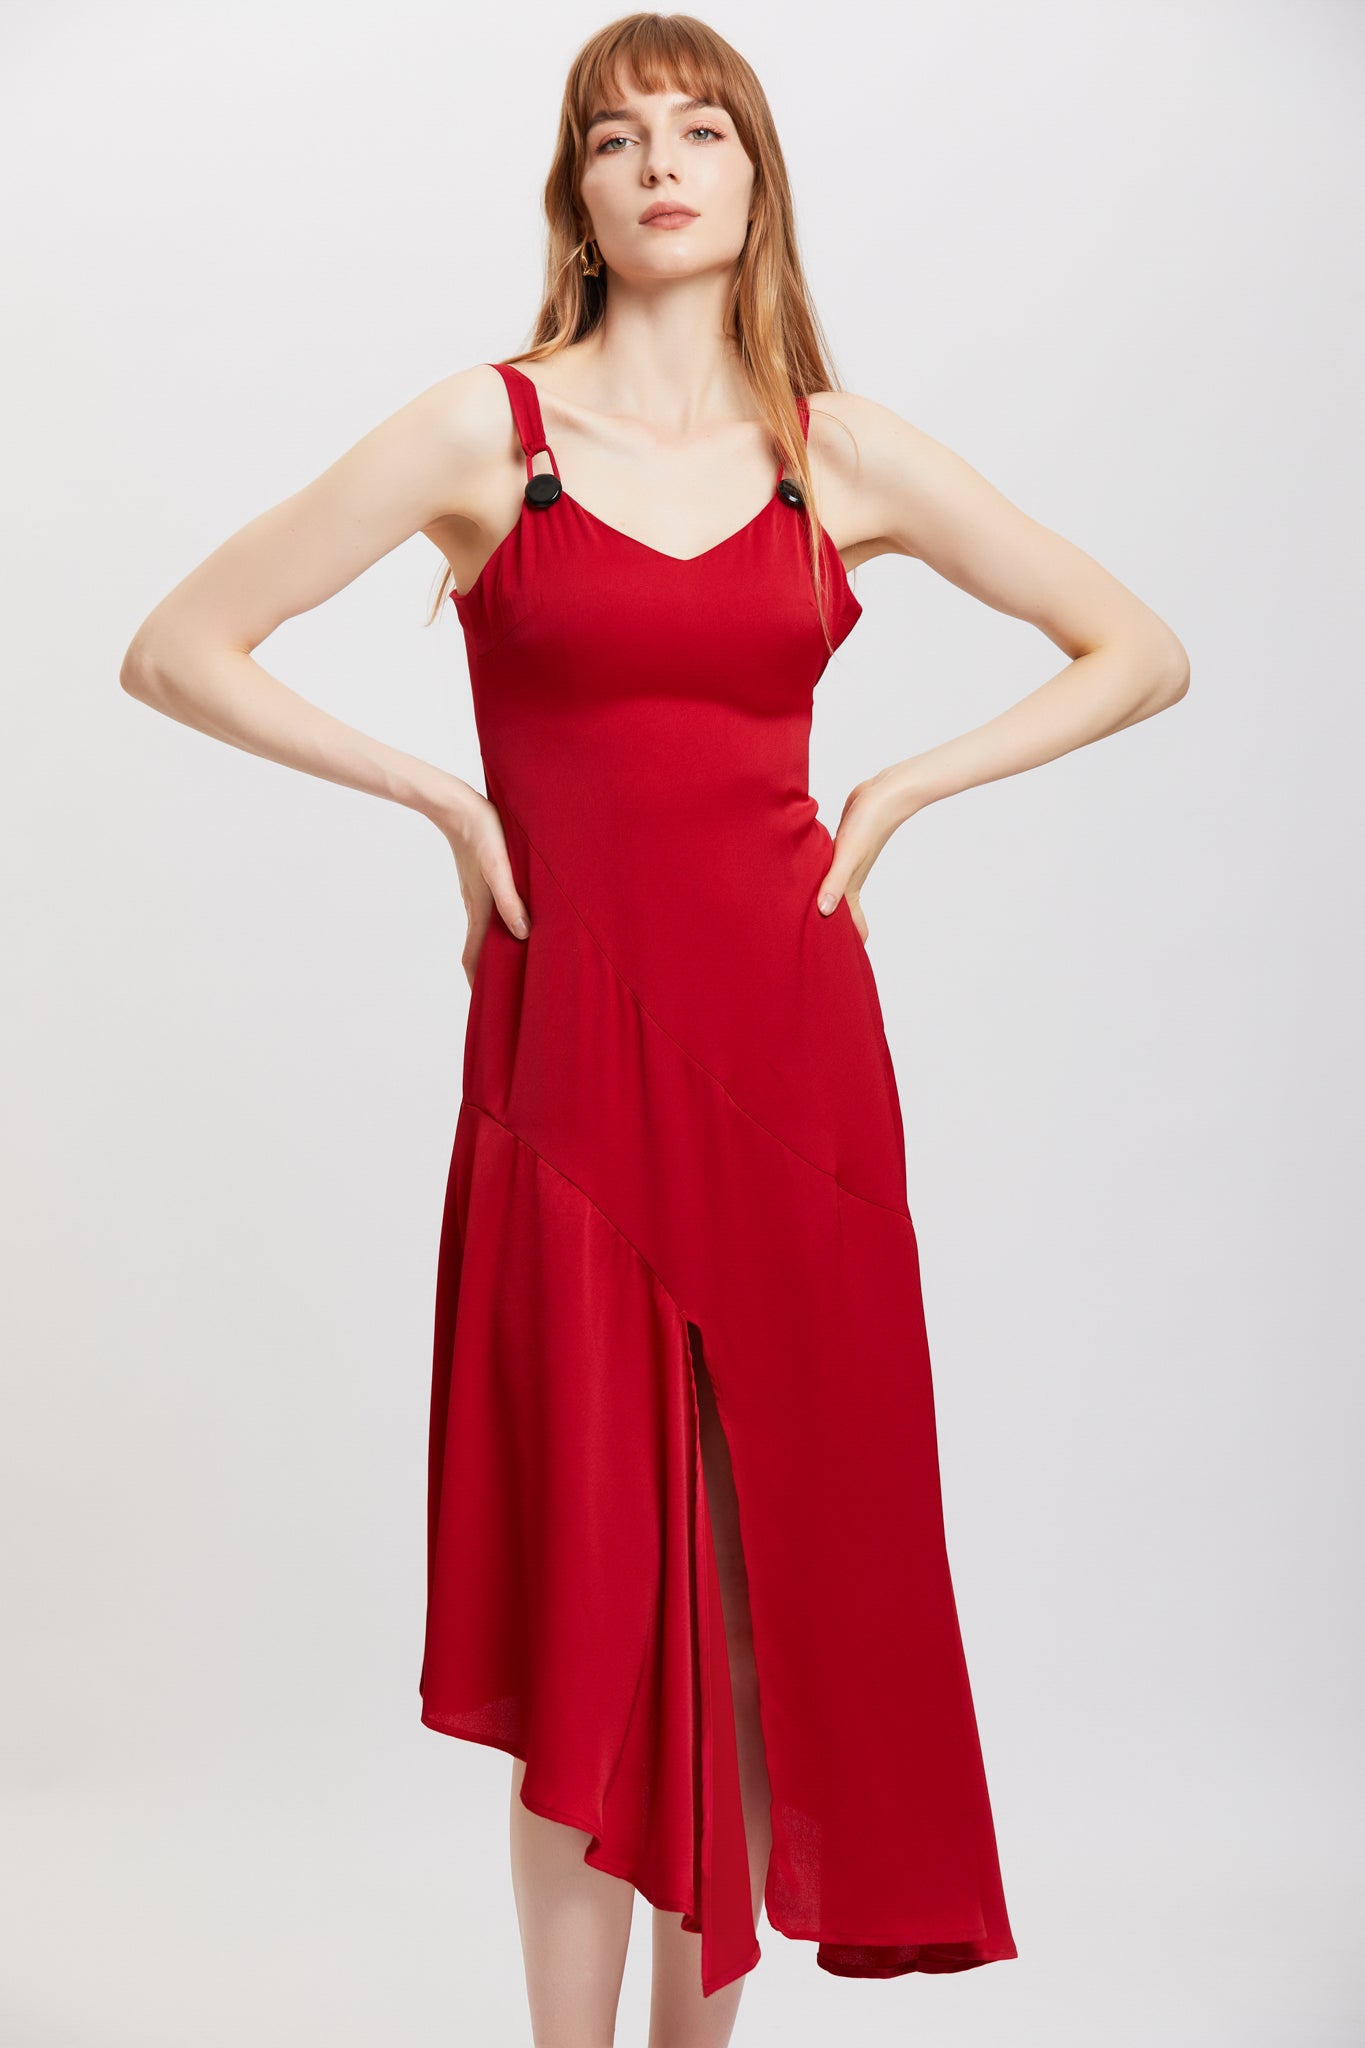 ST | Weigela Red Slip Dress